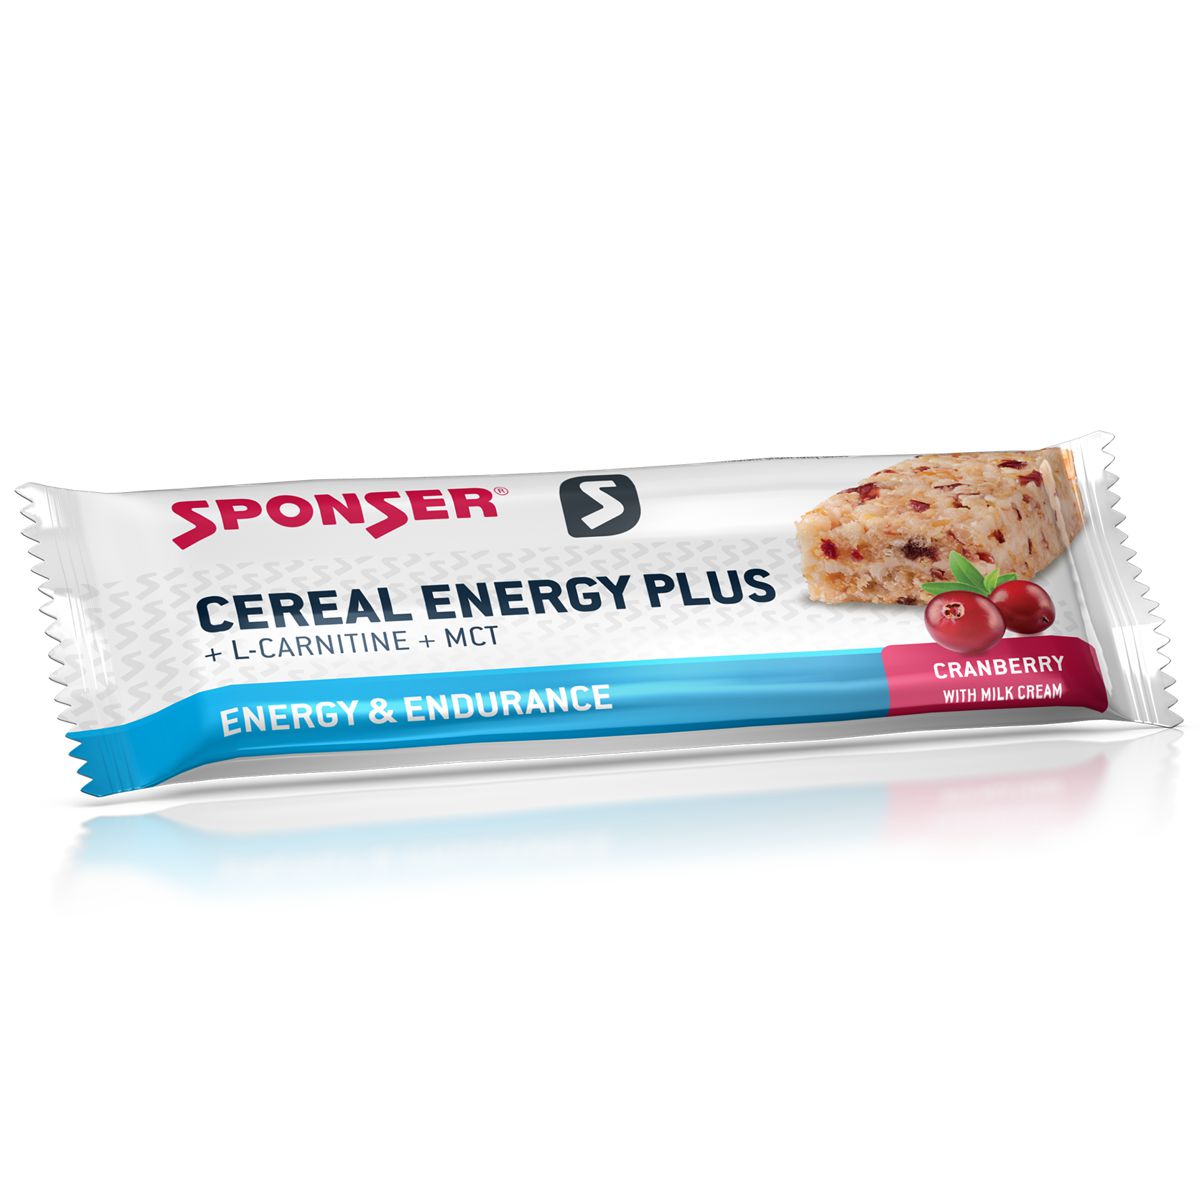 Sponser_Cereal_Energy_Bar_Plus_Cranberry_kaufen